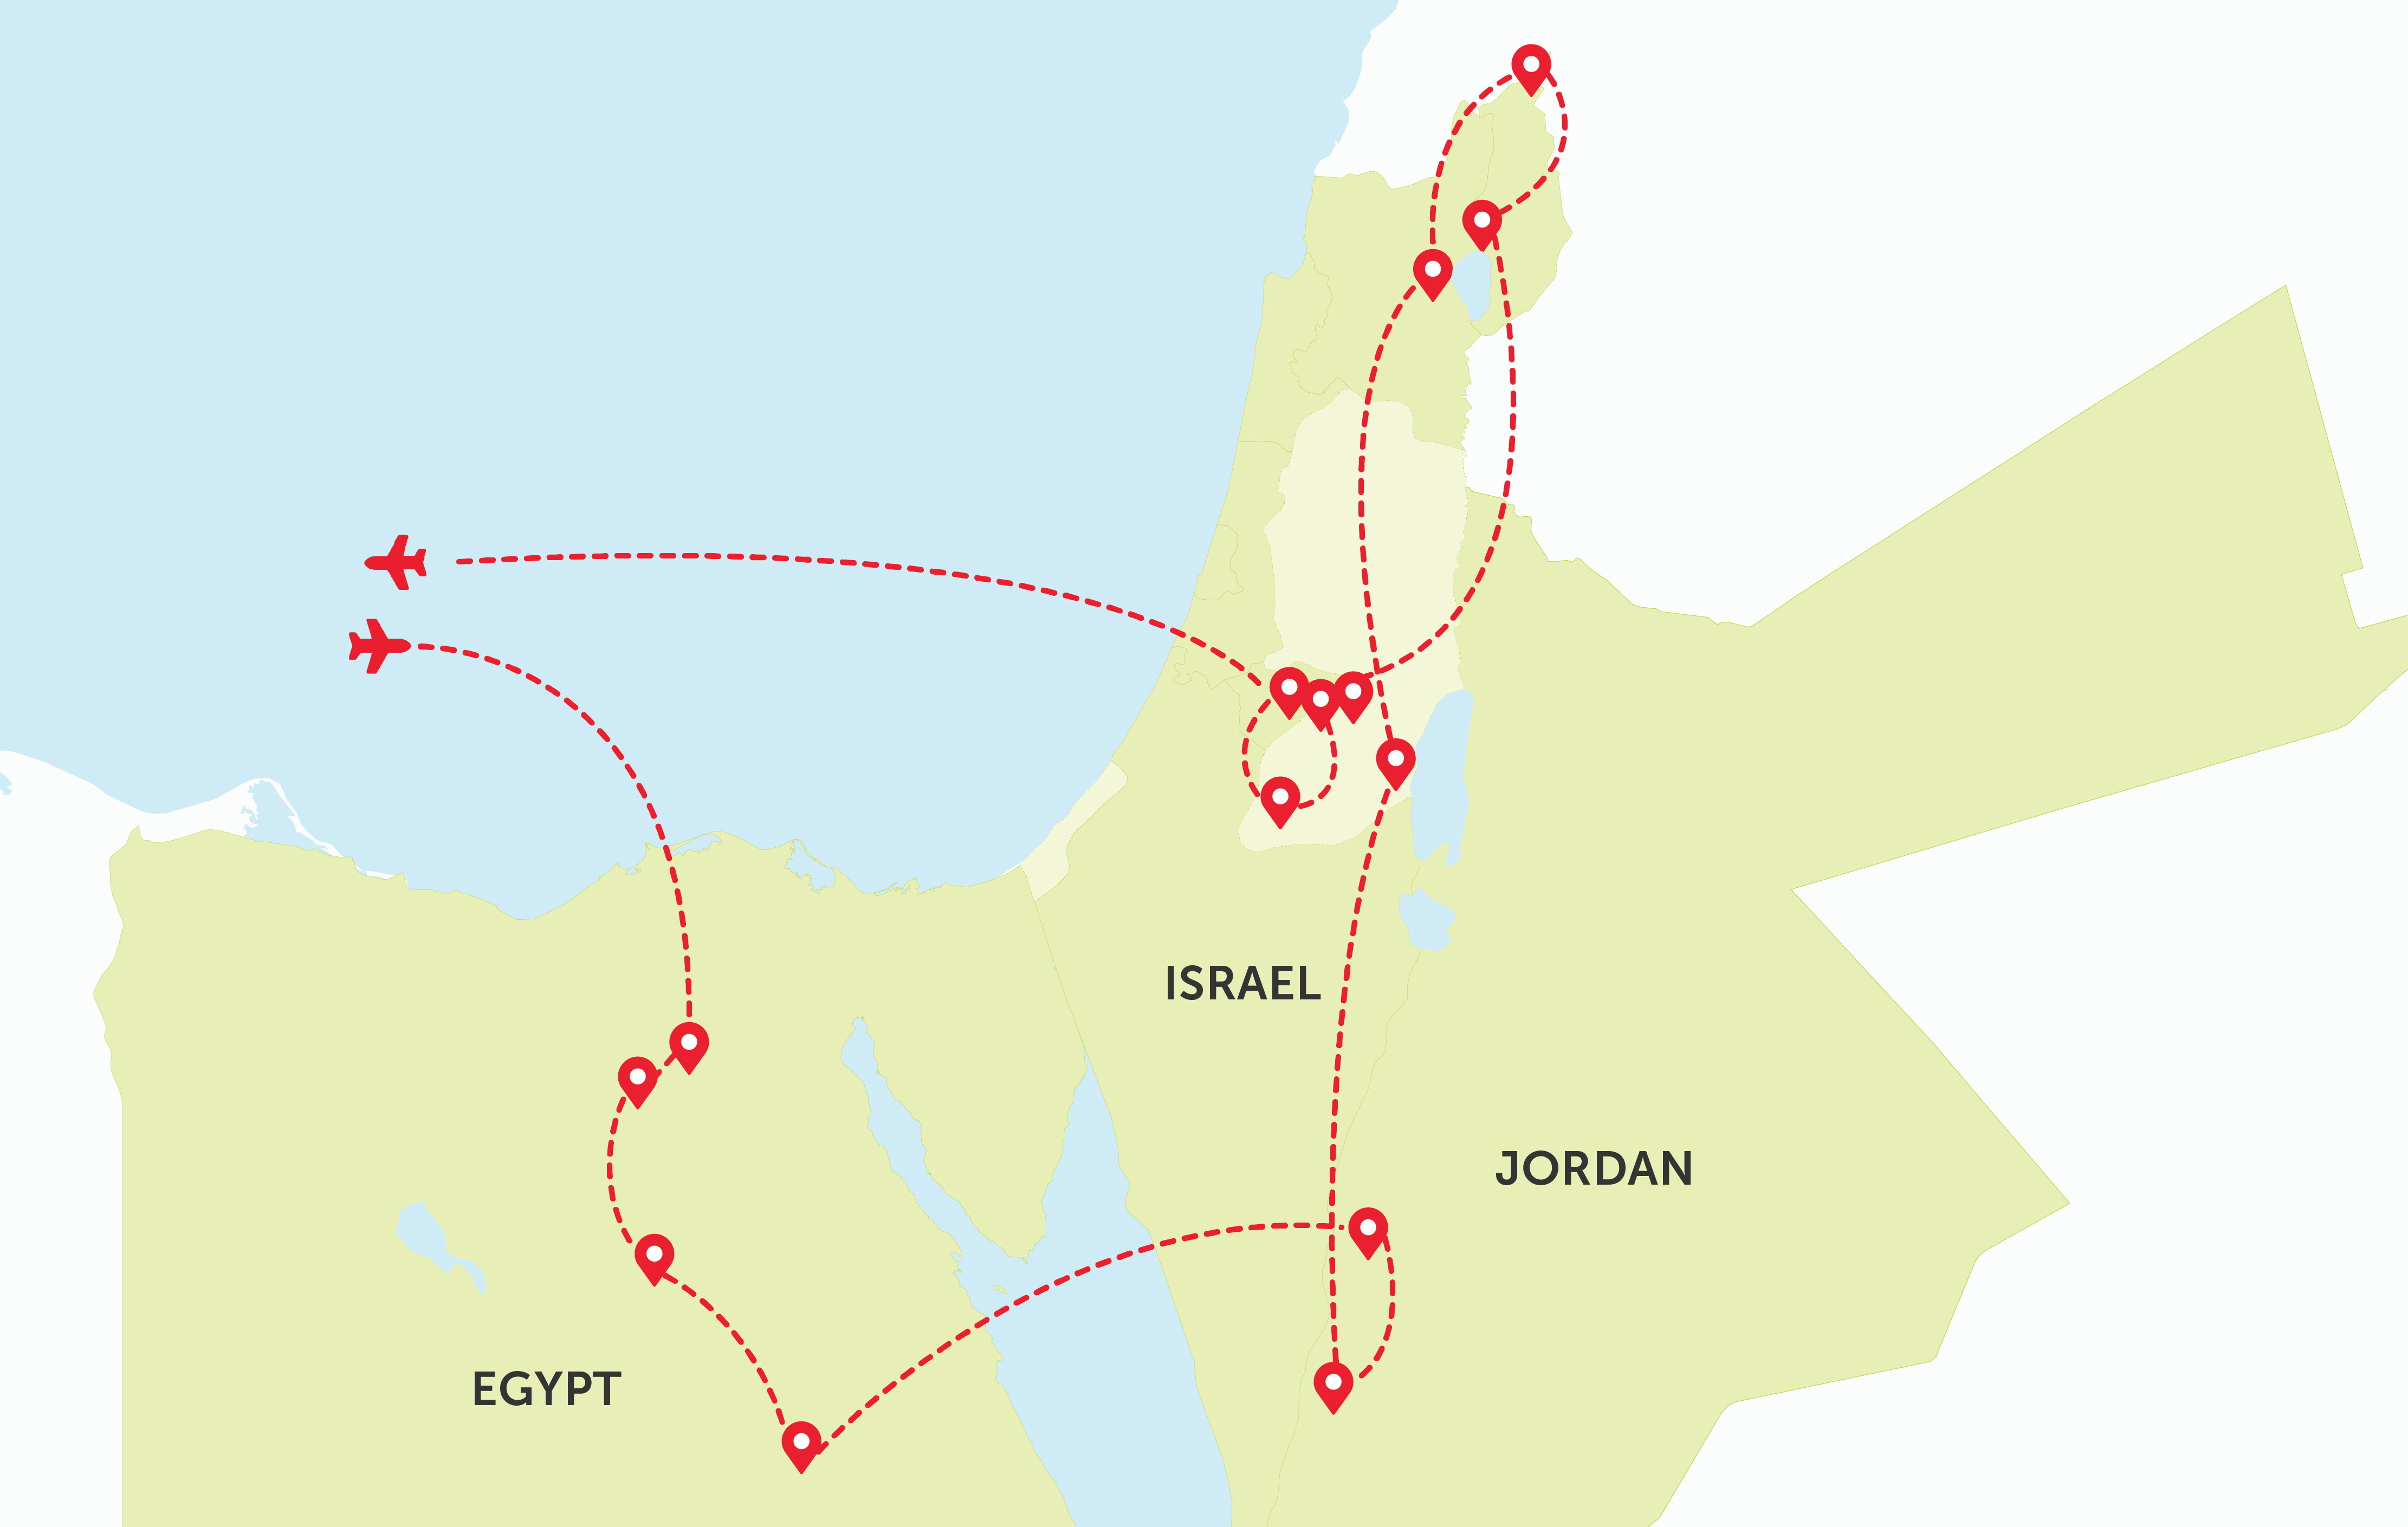 Israel, Jordan and Egypt